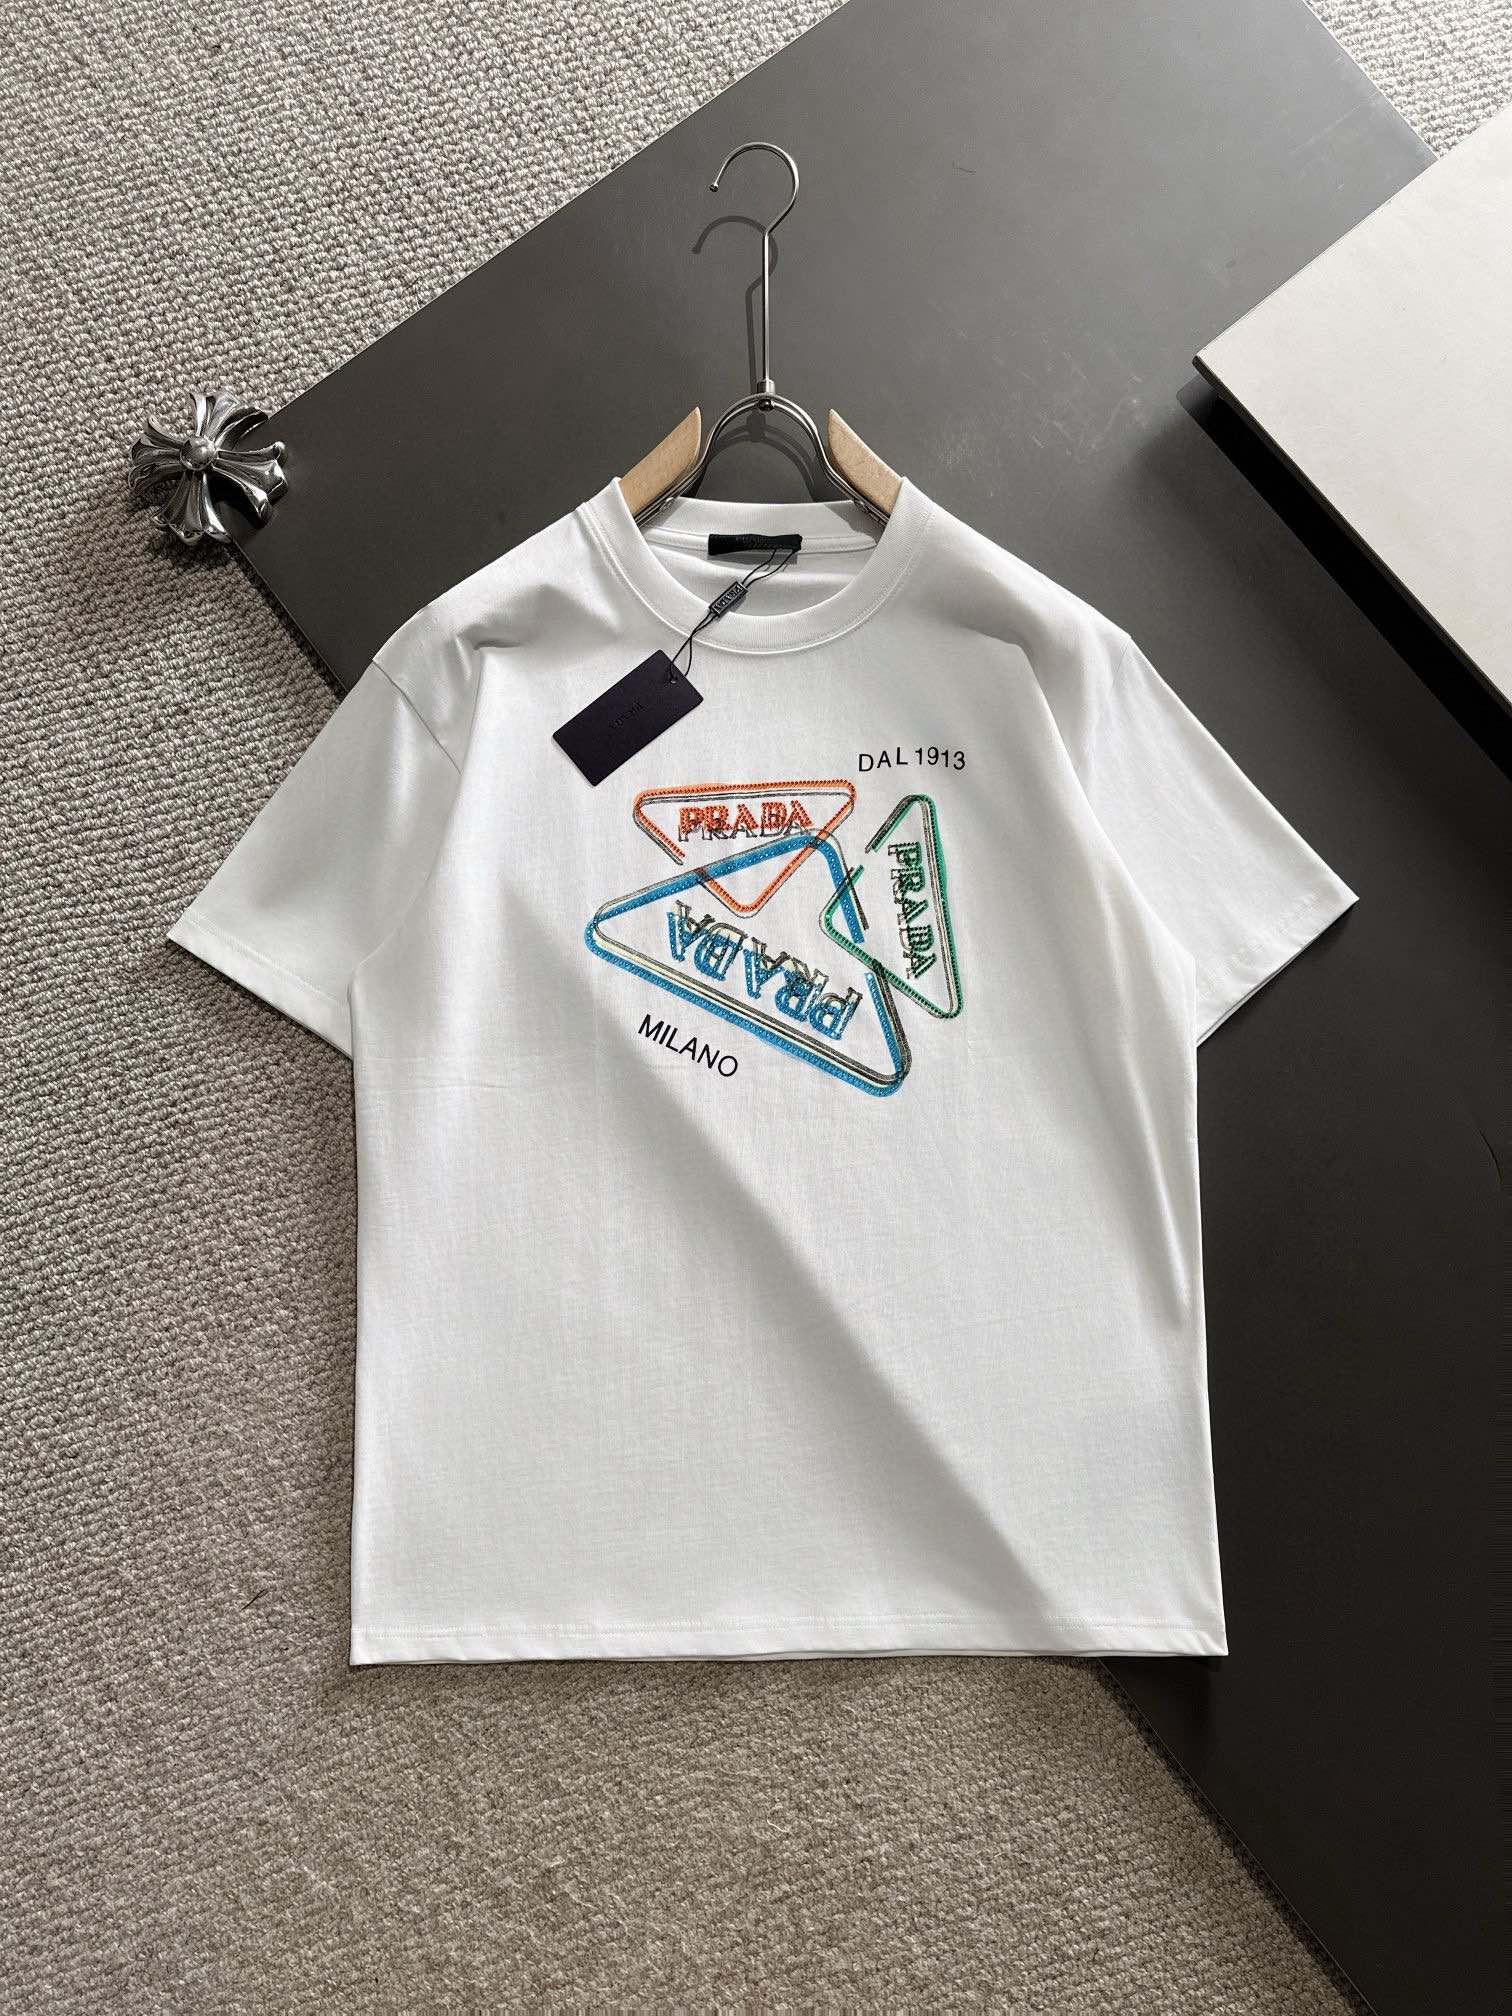 Brand Designer Replica
 Prada Clothing T-Shirt Black White Printing Unisex Spring Collection Short Sleeve